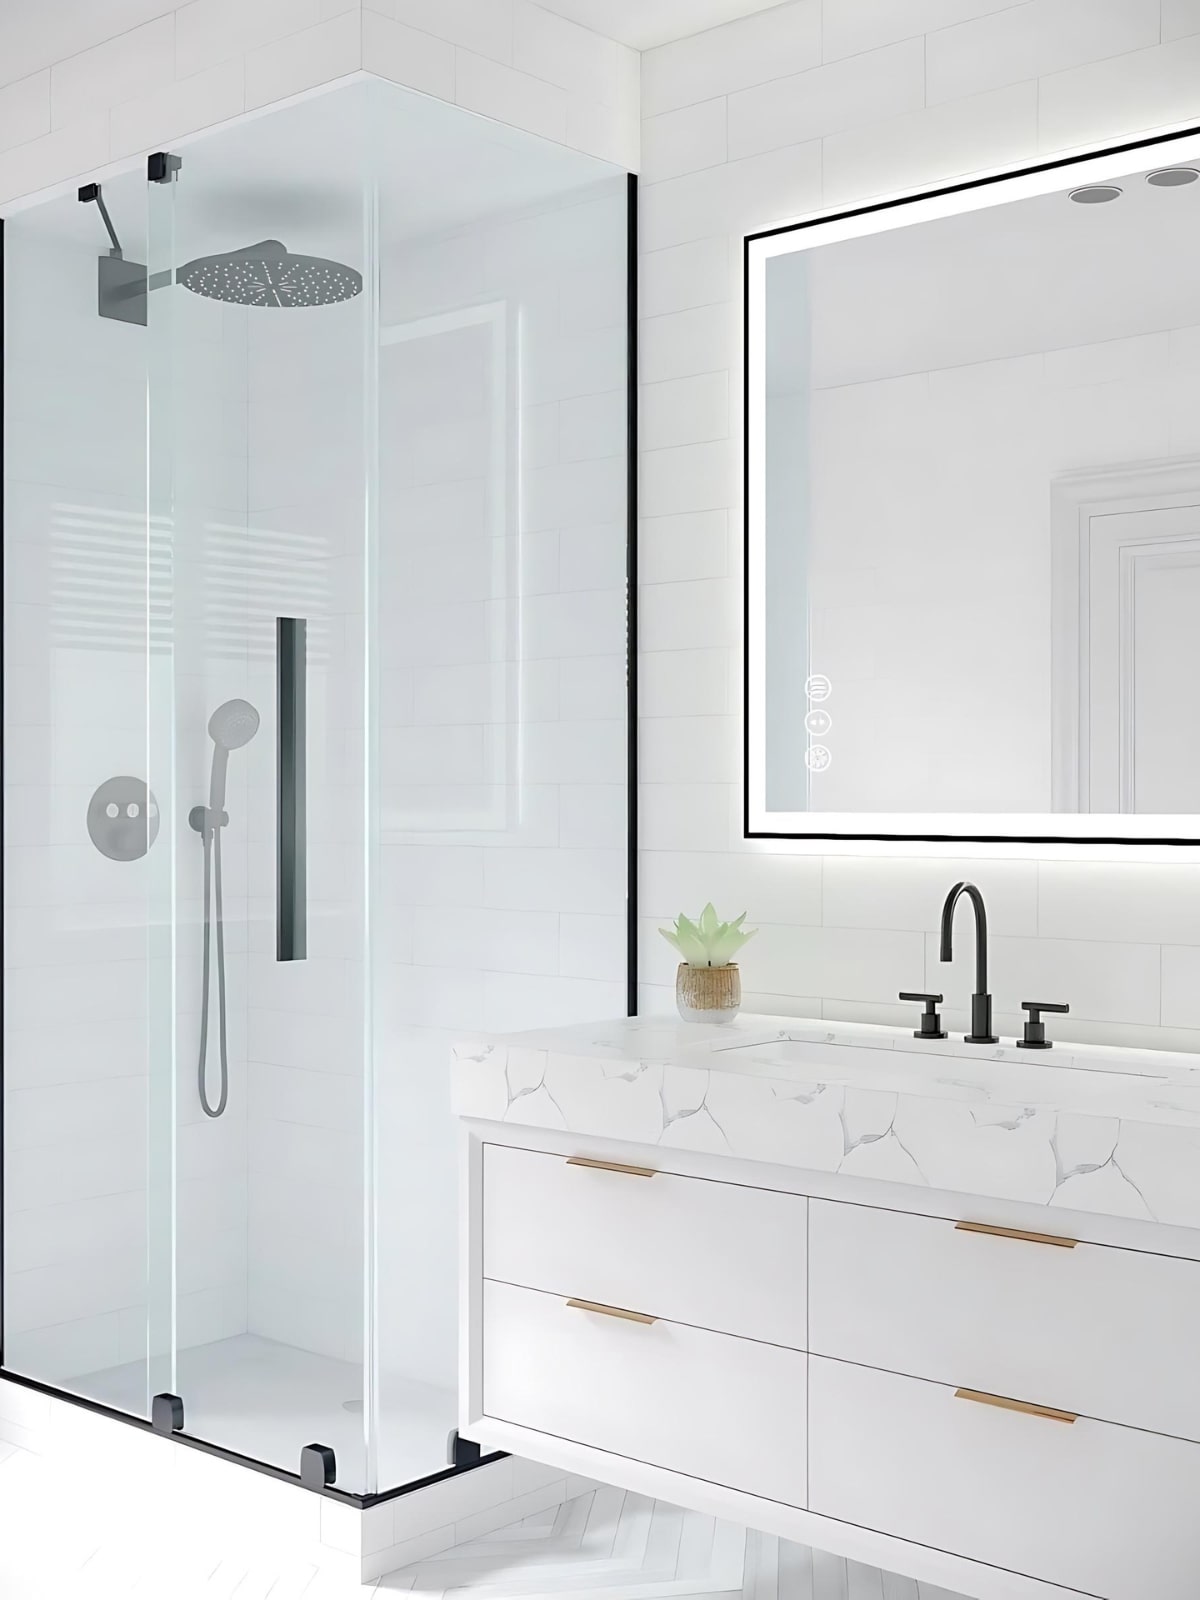 Witness a modern floating bathroom vanity with clean, sleek lines and space.